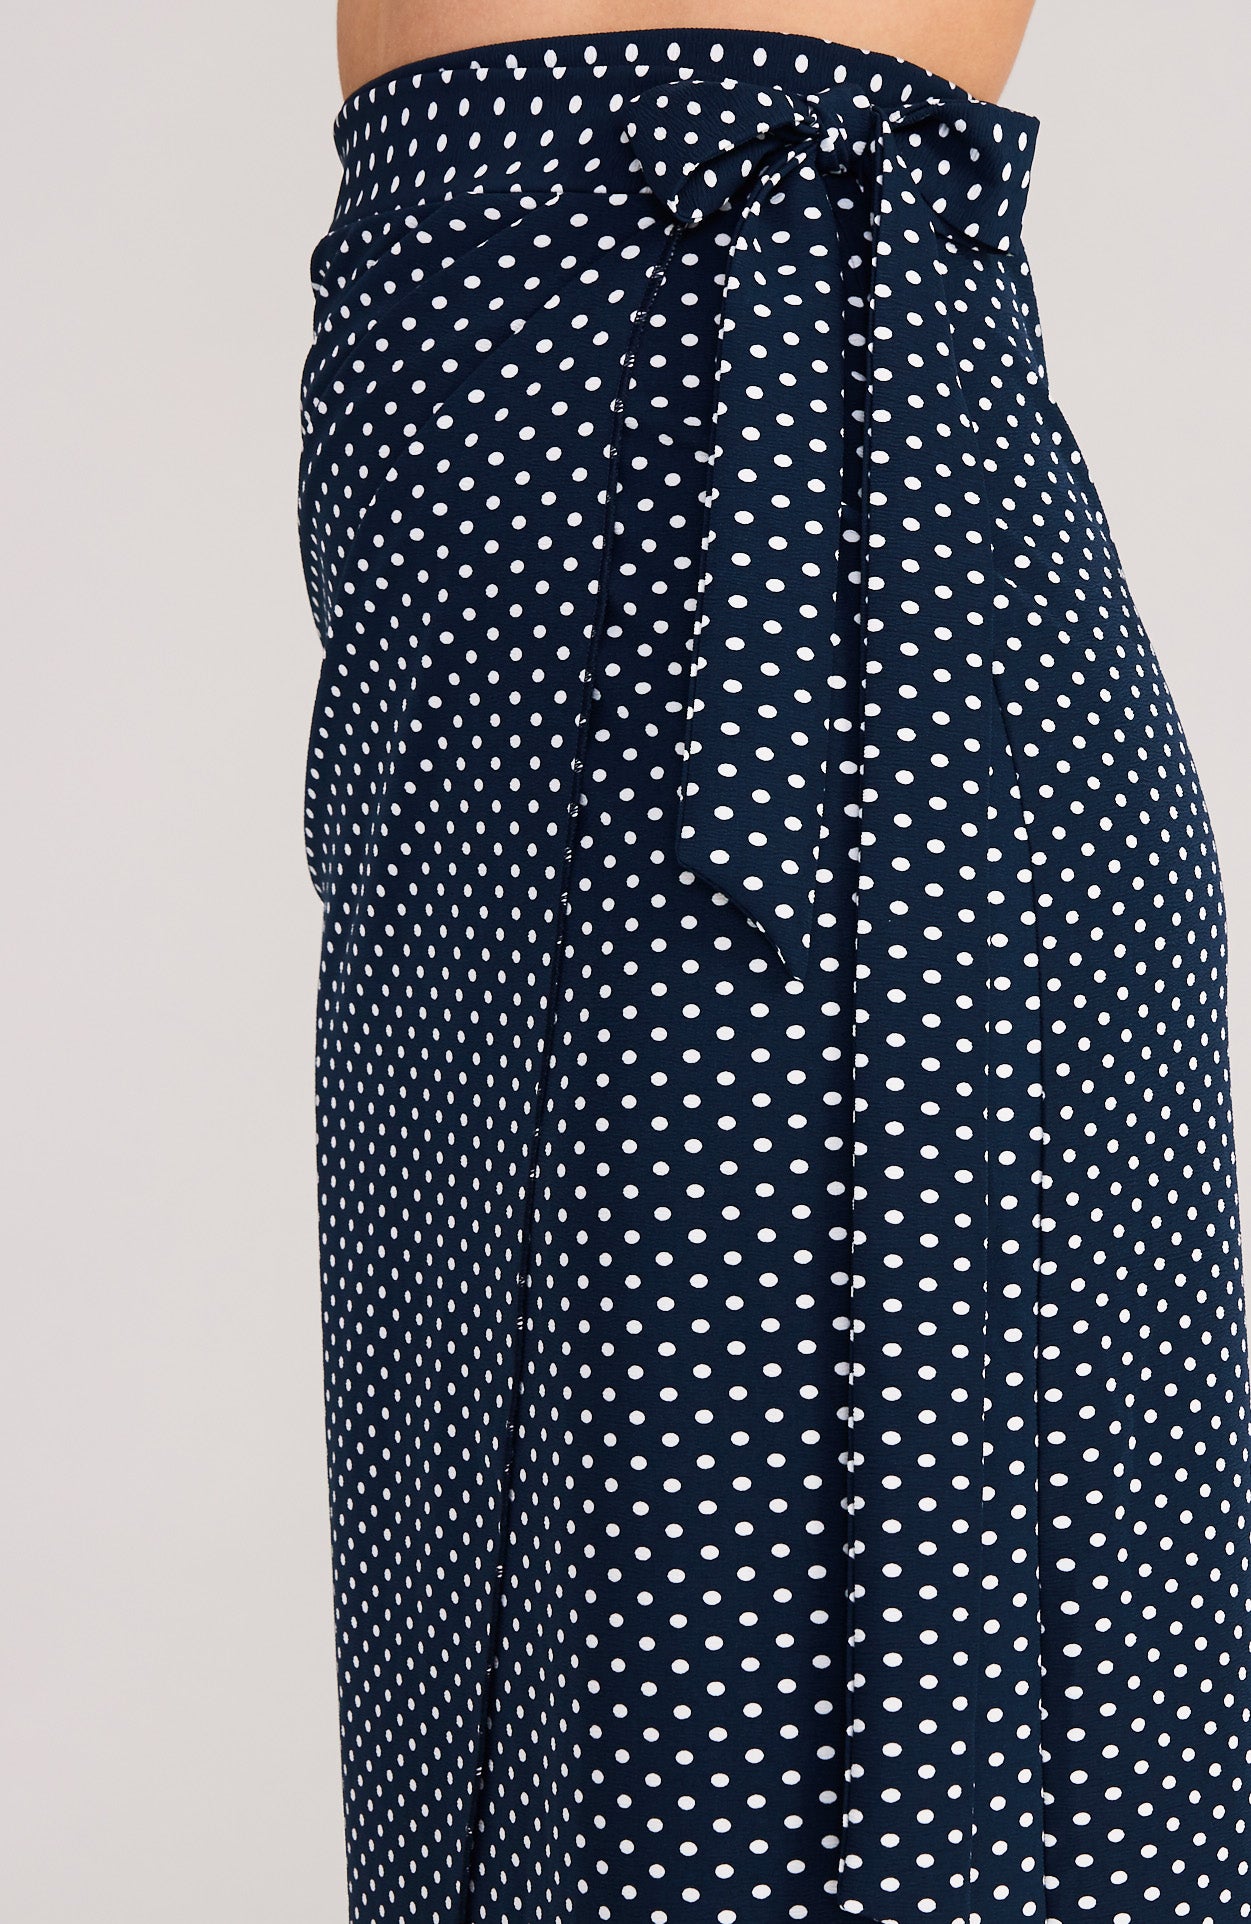 draped wrap skirt in polka dots